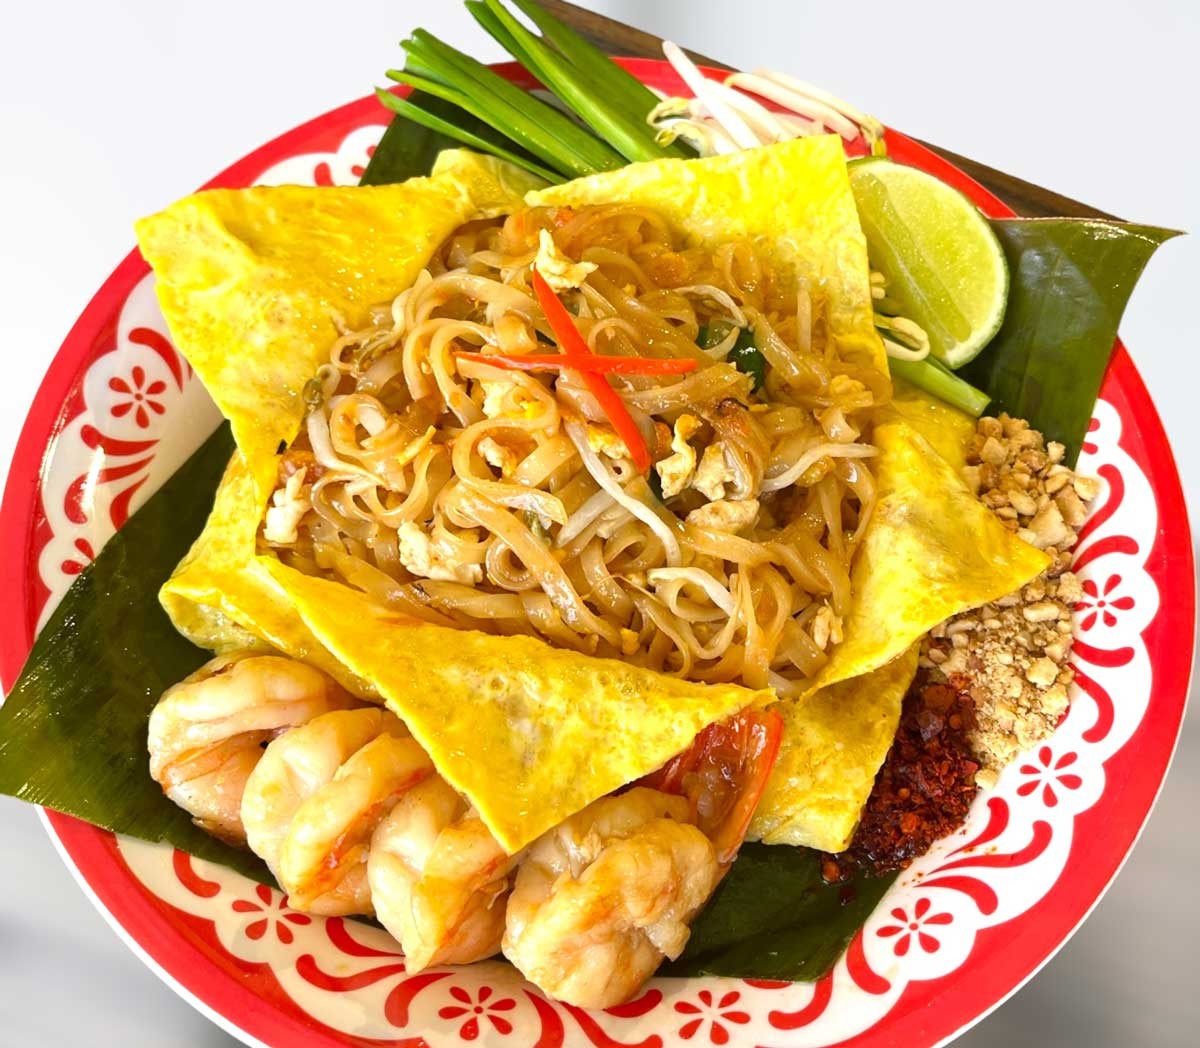 Pad Thai Shrimp from Royal Oak’s Kacha Thai Market served wrapped in Thai-style omelet.